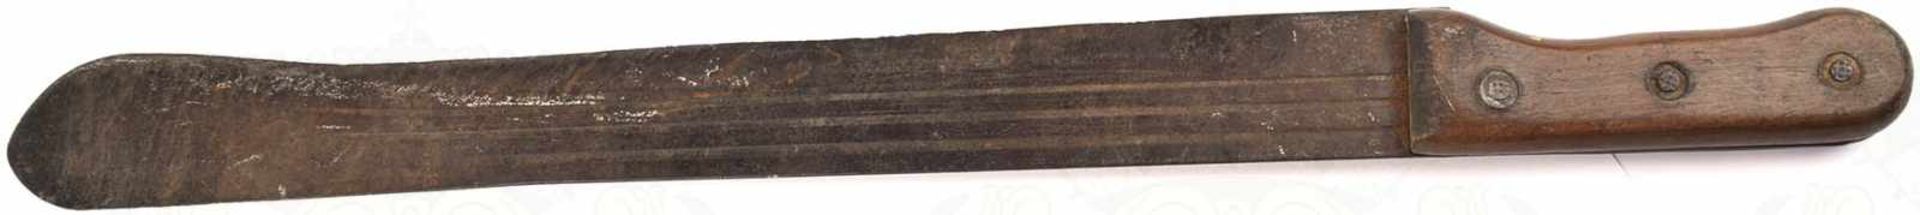 MACHETE, für Kolonisten bzw. Farmer, blanke Klinge, L. 46 cm, beidseitig jew. 3 schmale